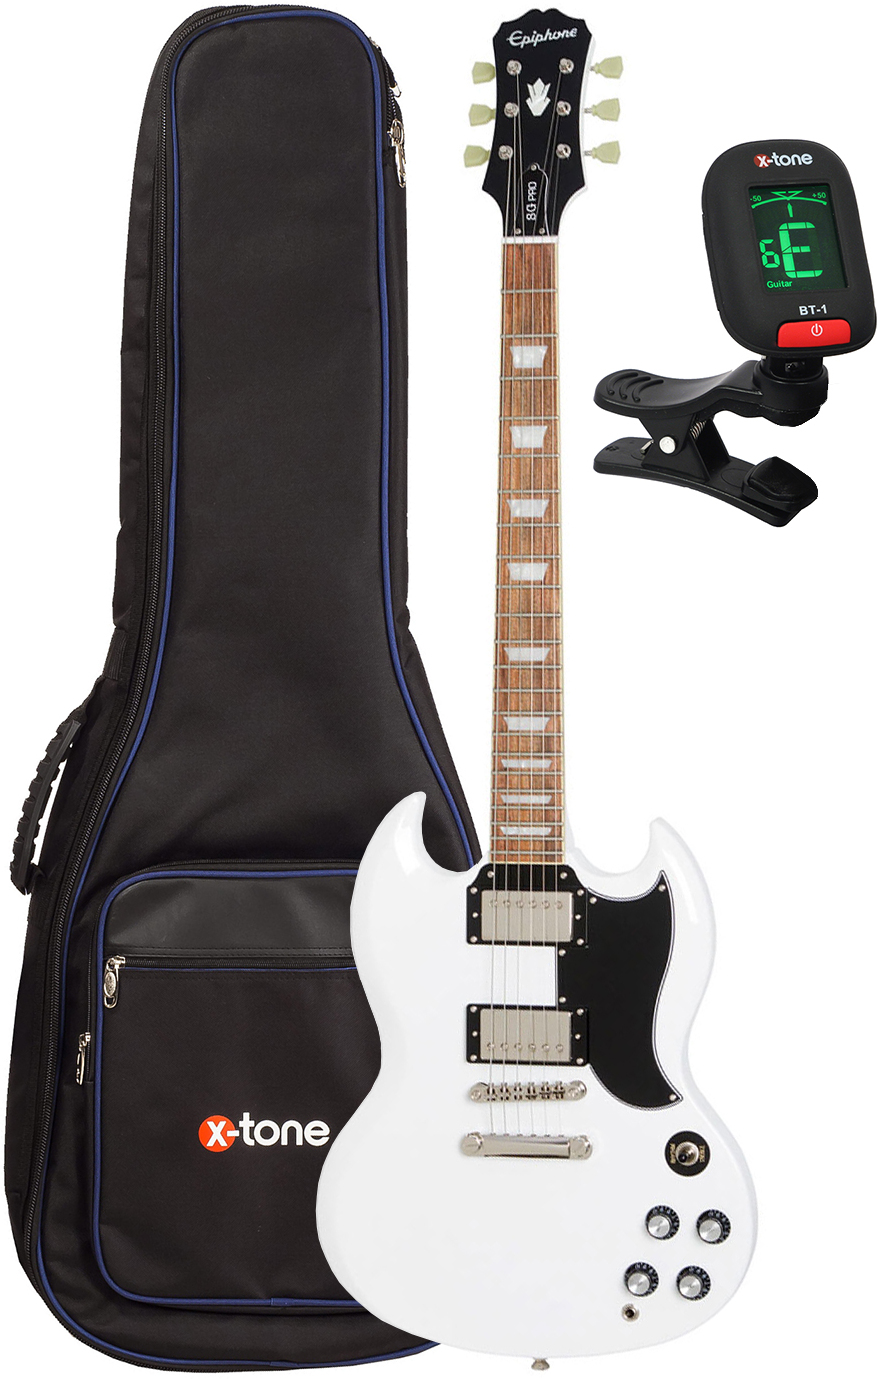 Epiphone G-400 Pro + X-tone 2015 Ele-bk + X-tone 3110 - Alpine White - Electric guitar set - Main picture